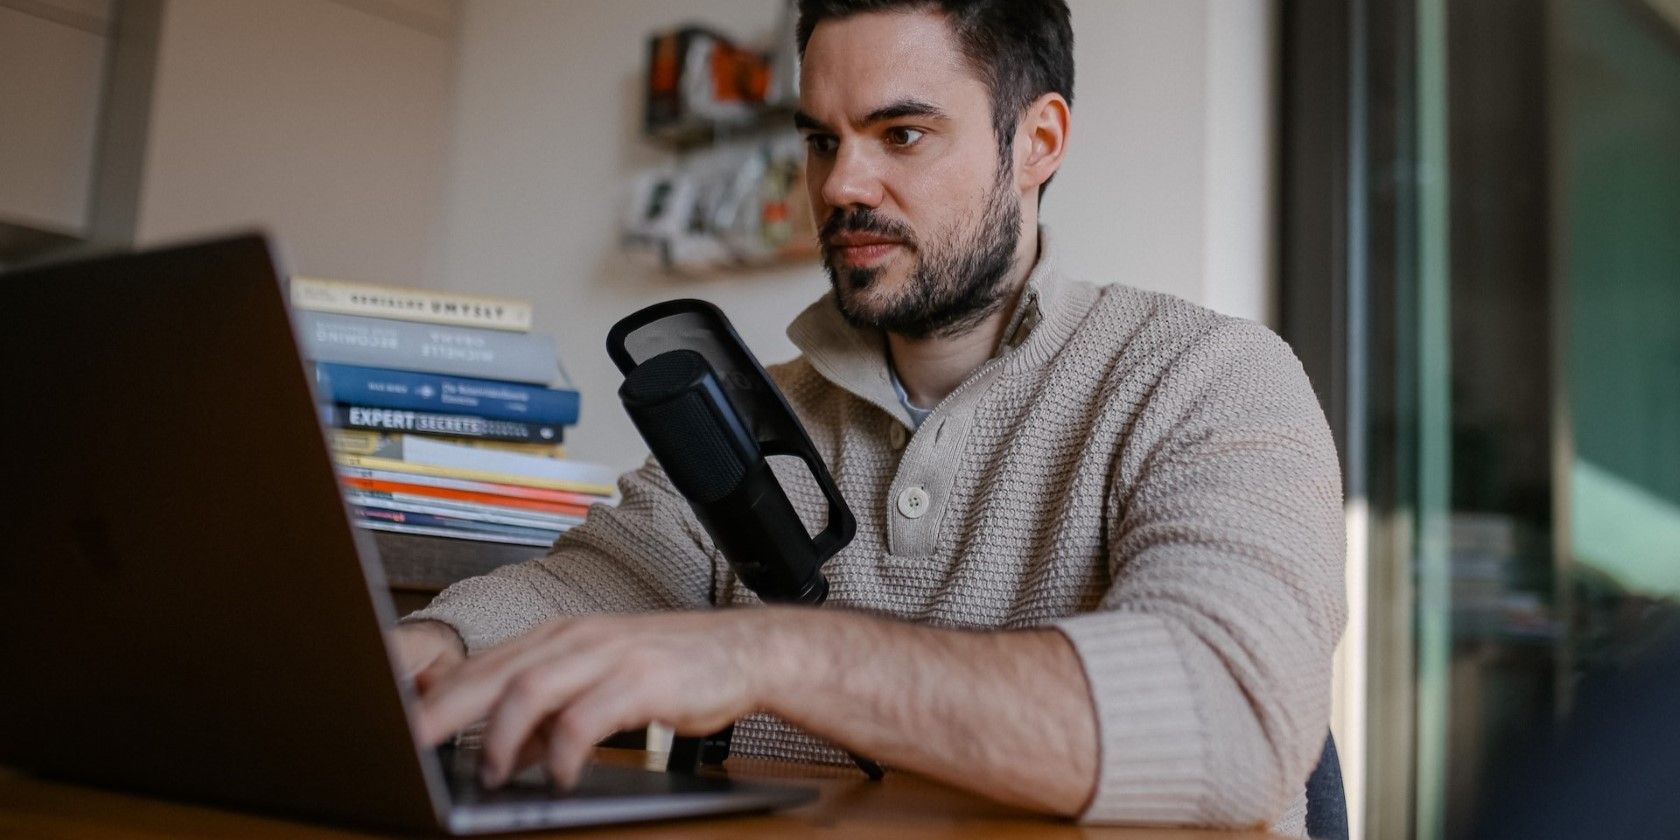 Man In Gray Sweater Working On A Laptop.jpg